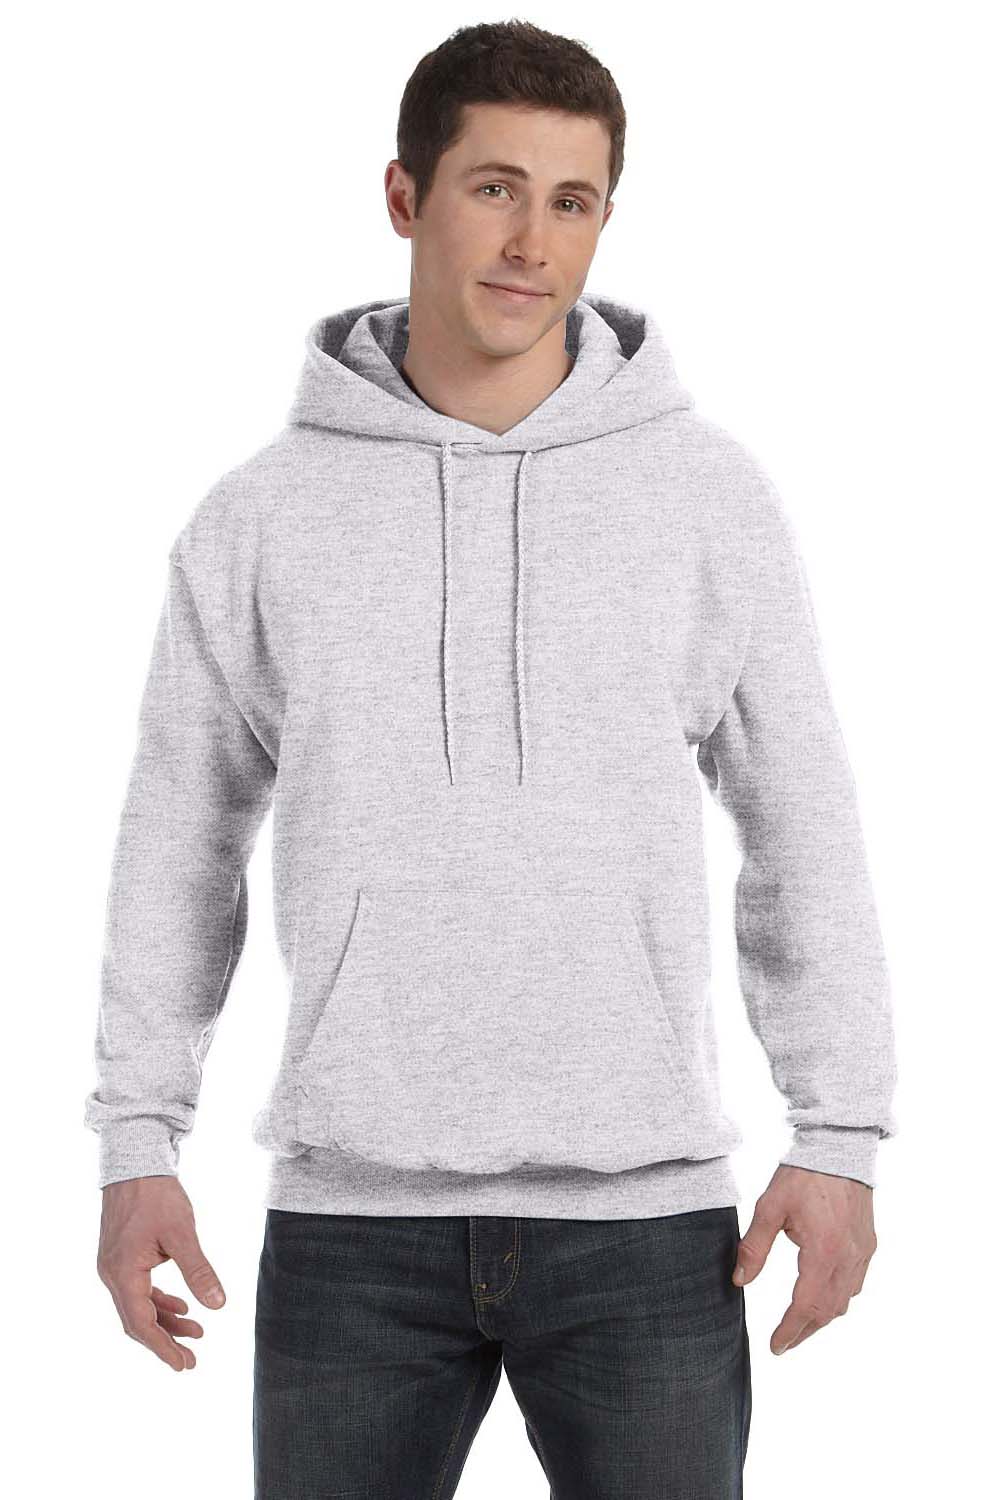 Hanes P170 Mens EcoSmart Print Pro XP Hooded Sweatshirt Hoodie Ash Grey Front